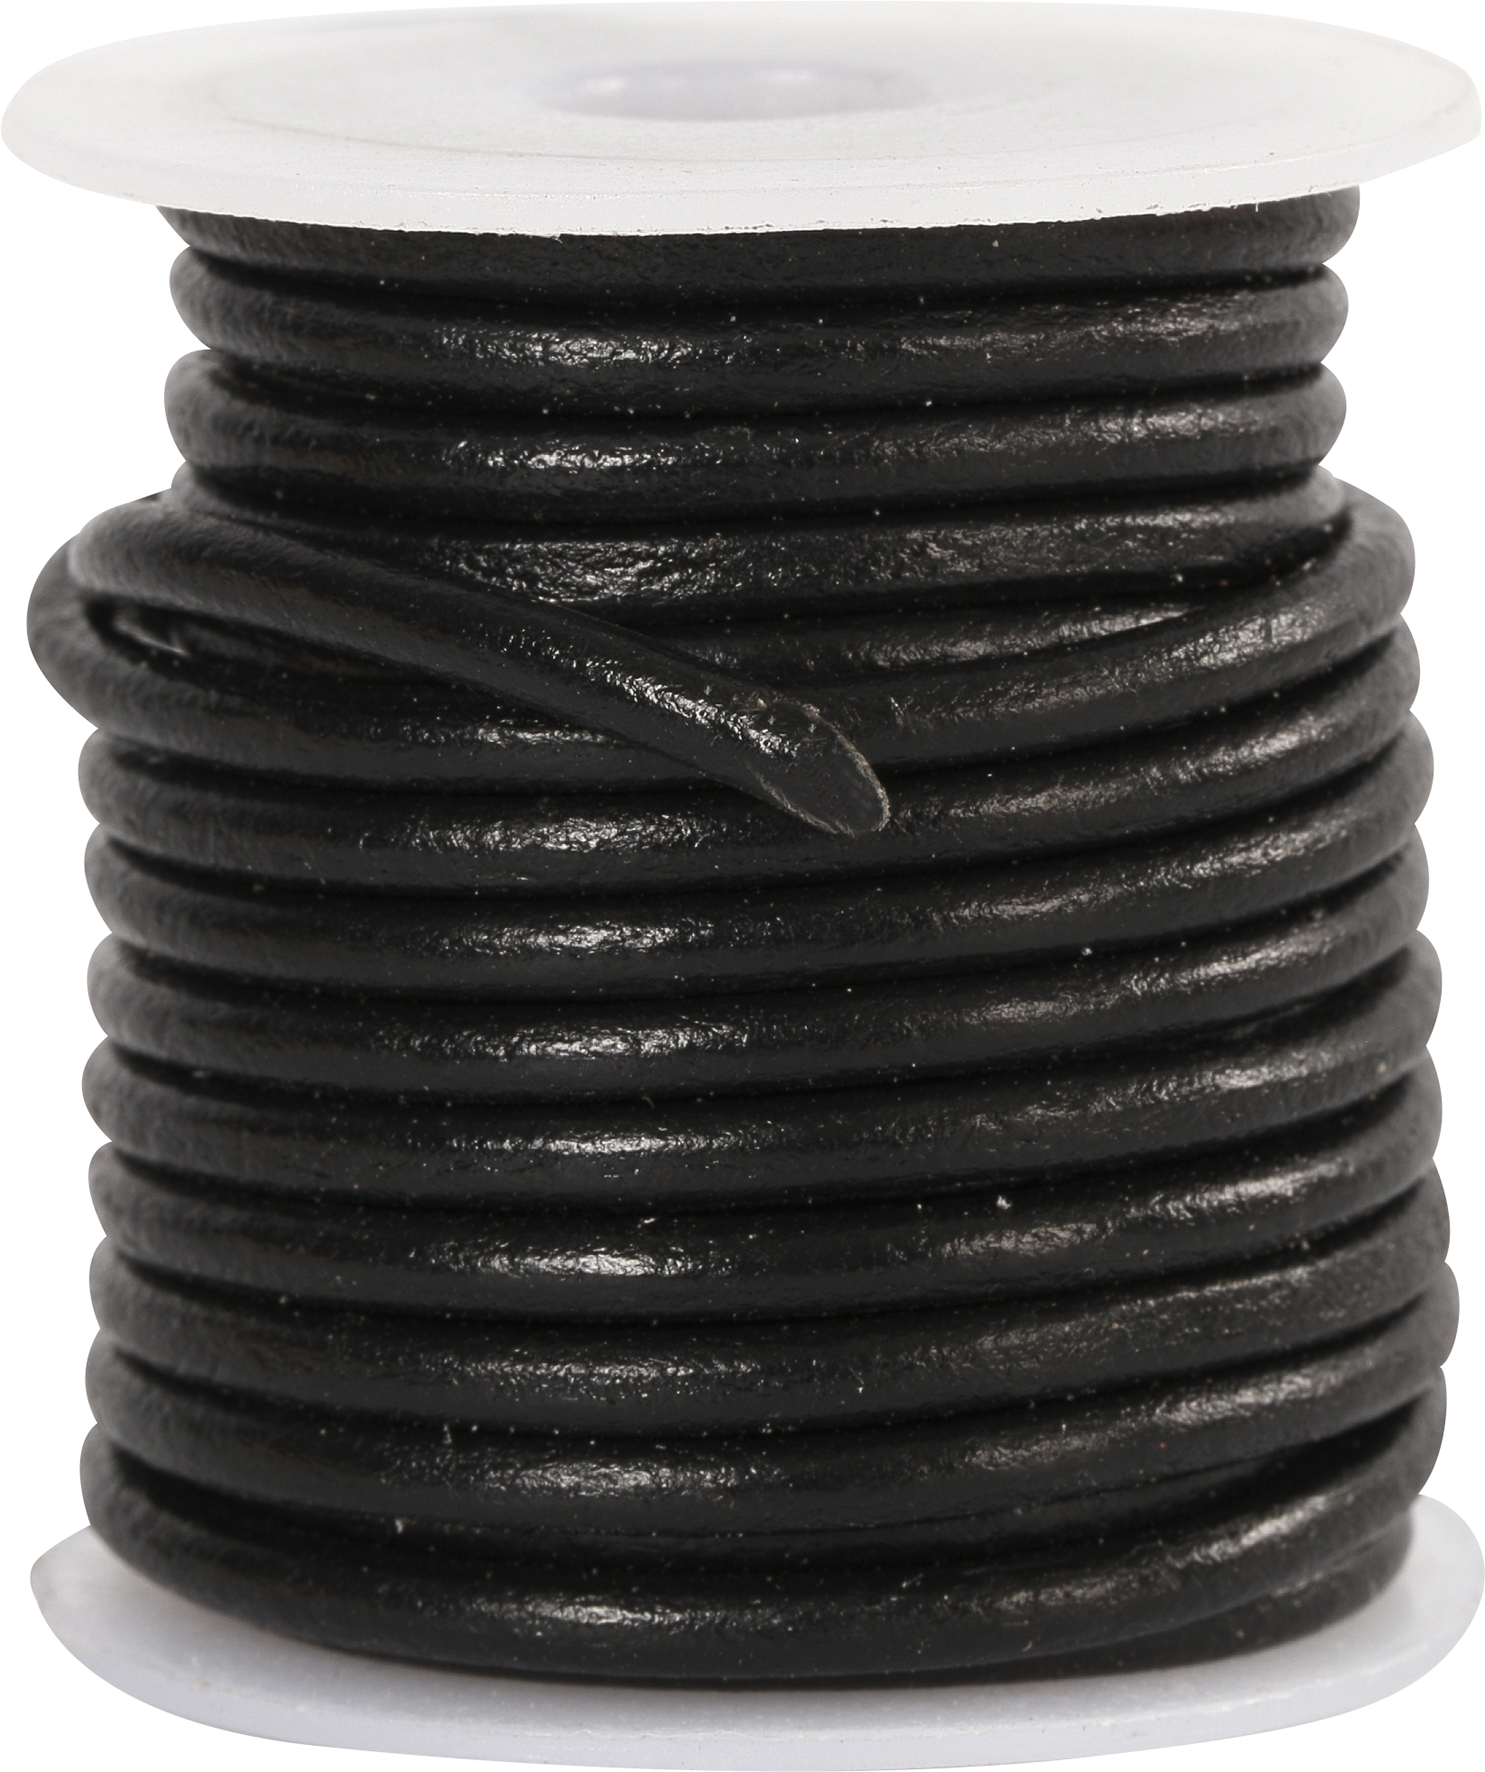 [8300985] Lädersnöre 3mm 5m svart